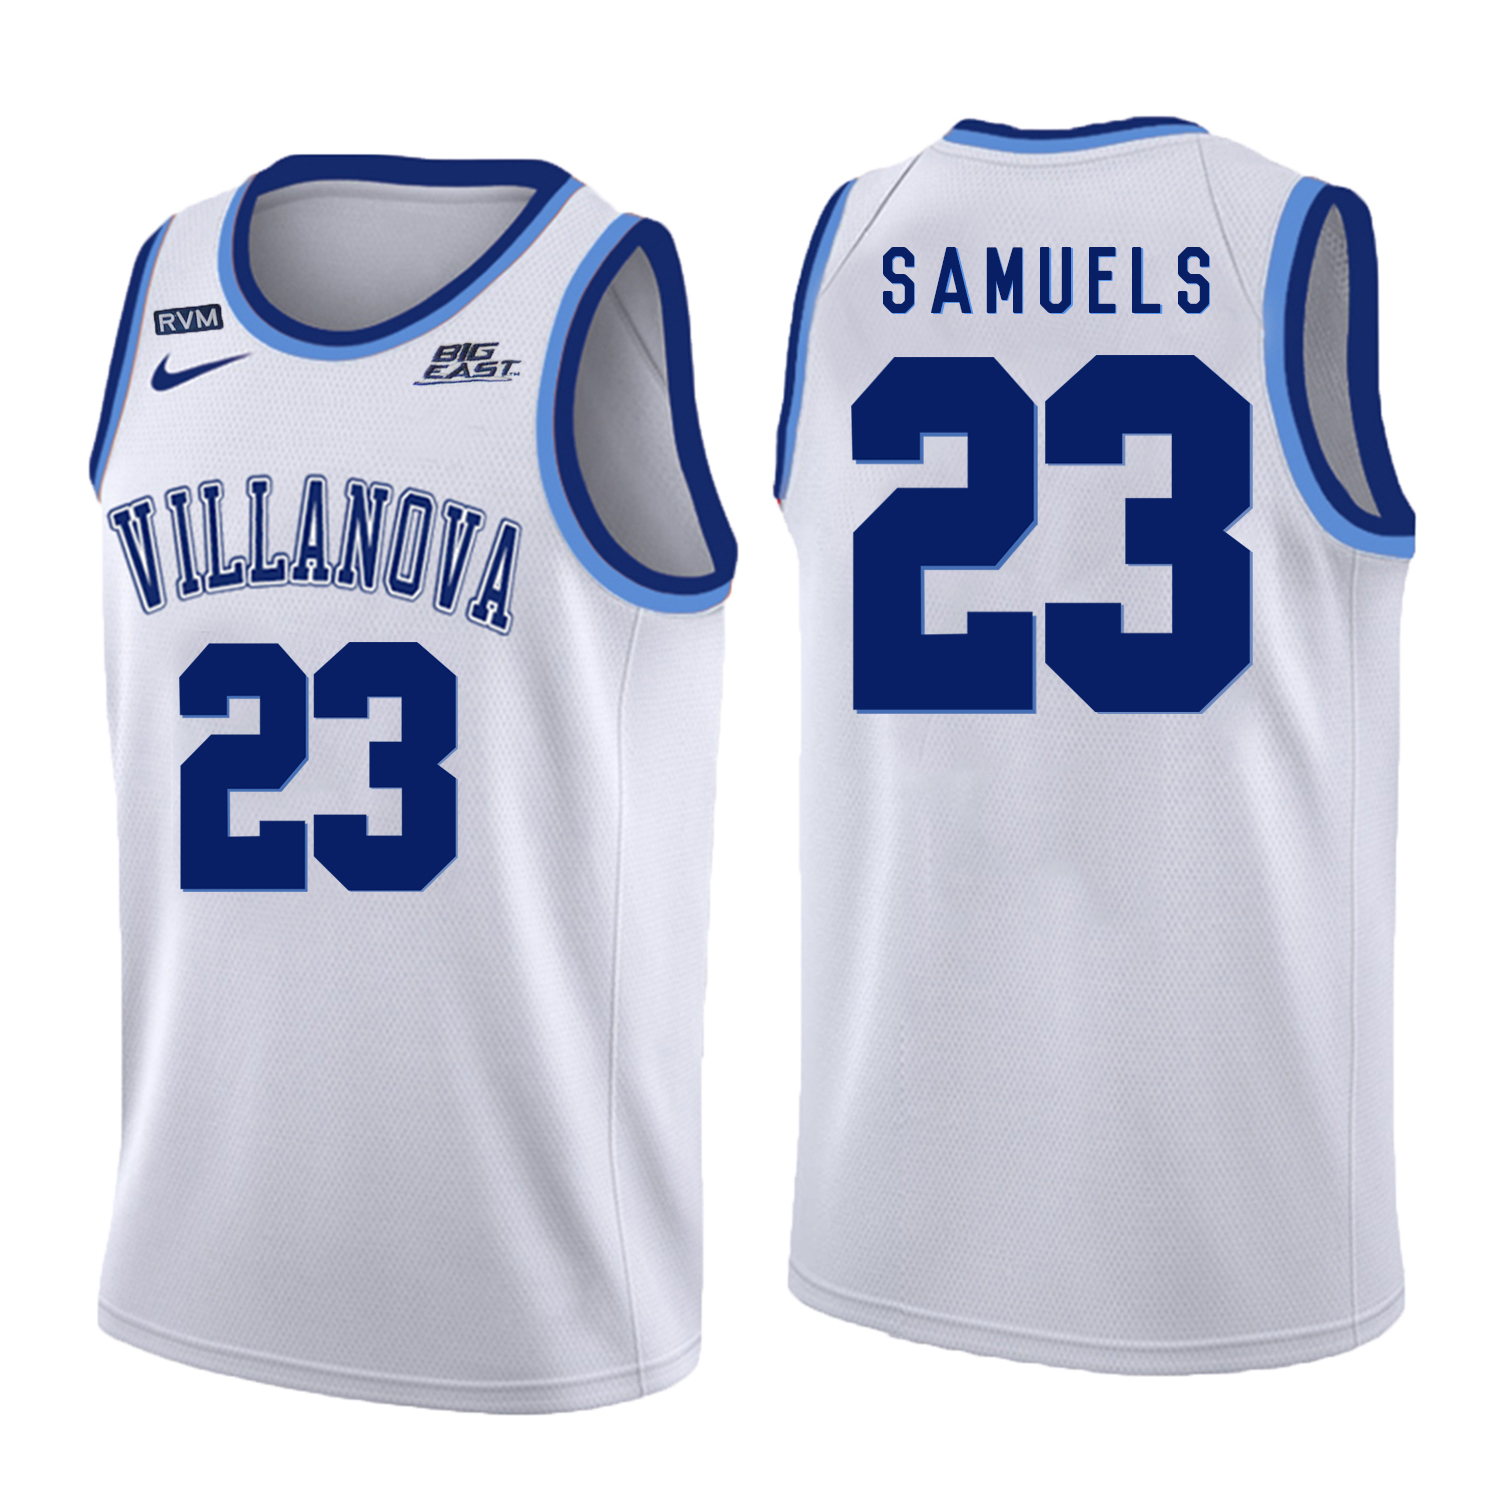 Villanova Wildcats 23 Jermaine Samuels White College Basketball Jersey